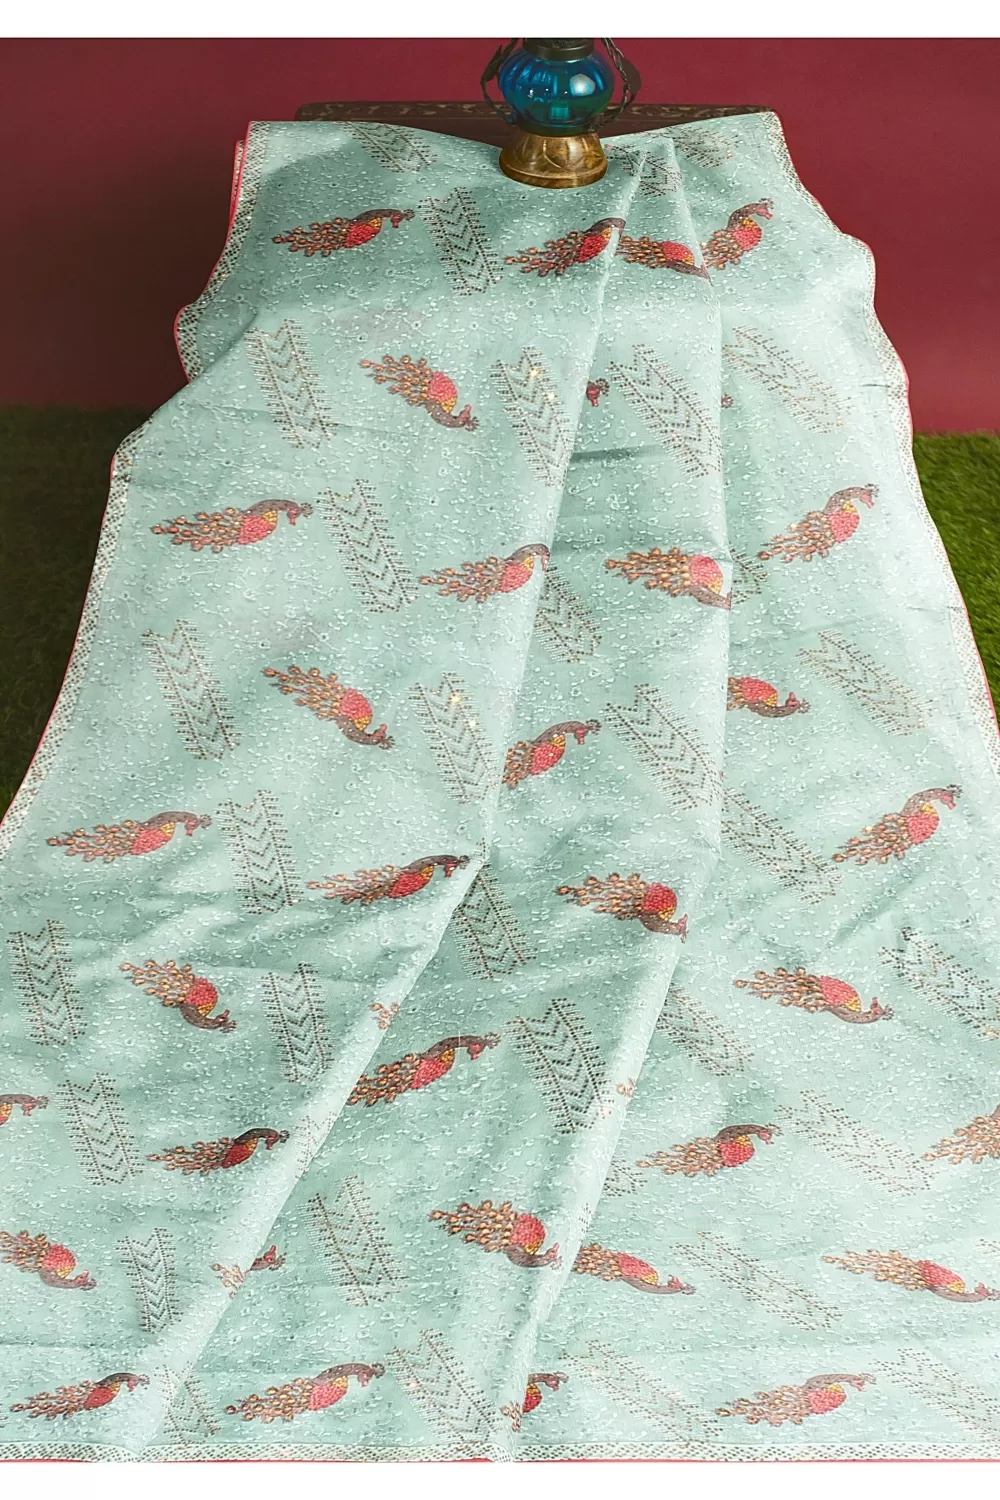 Sea Green Chiffon Embroidery Saree